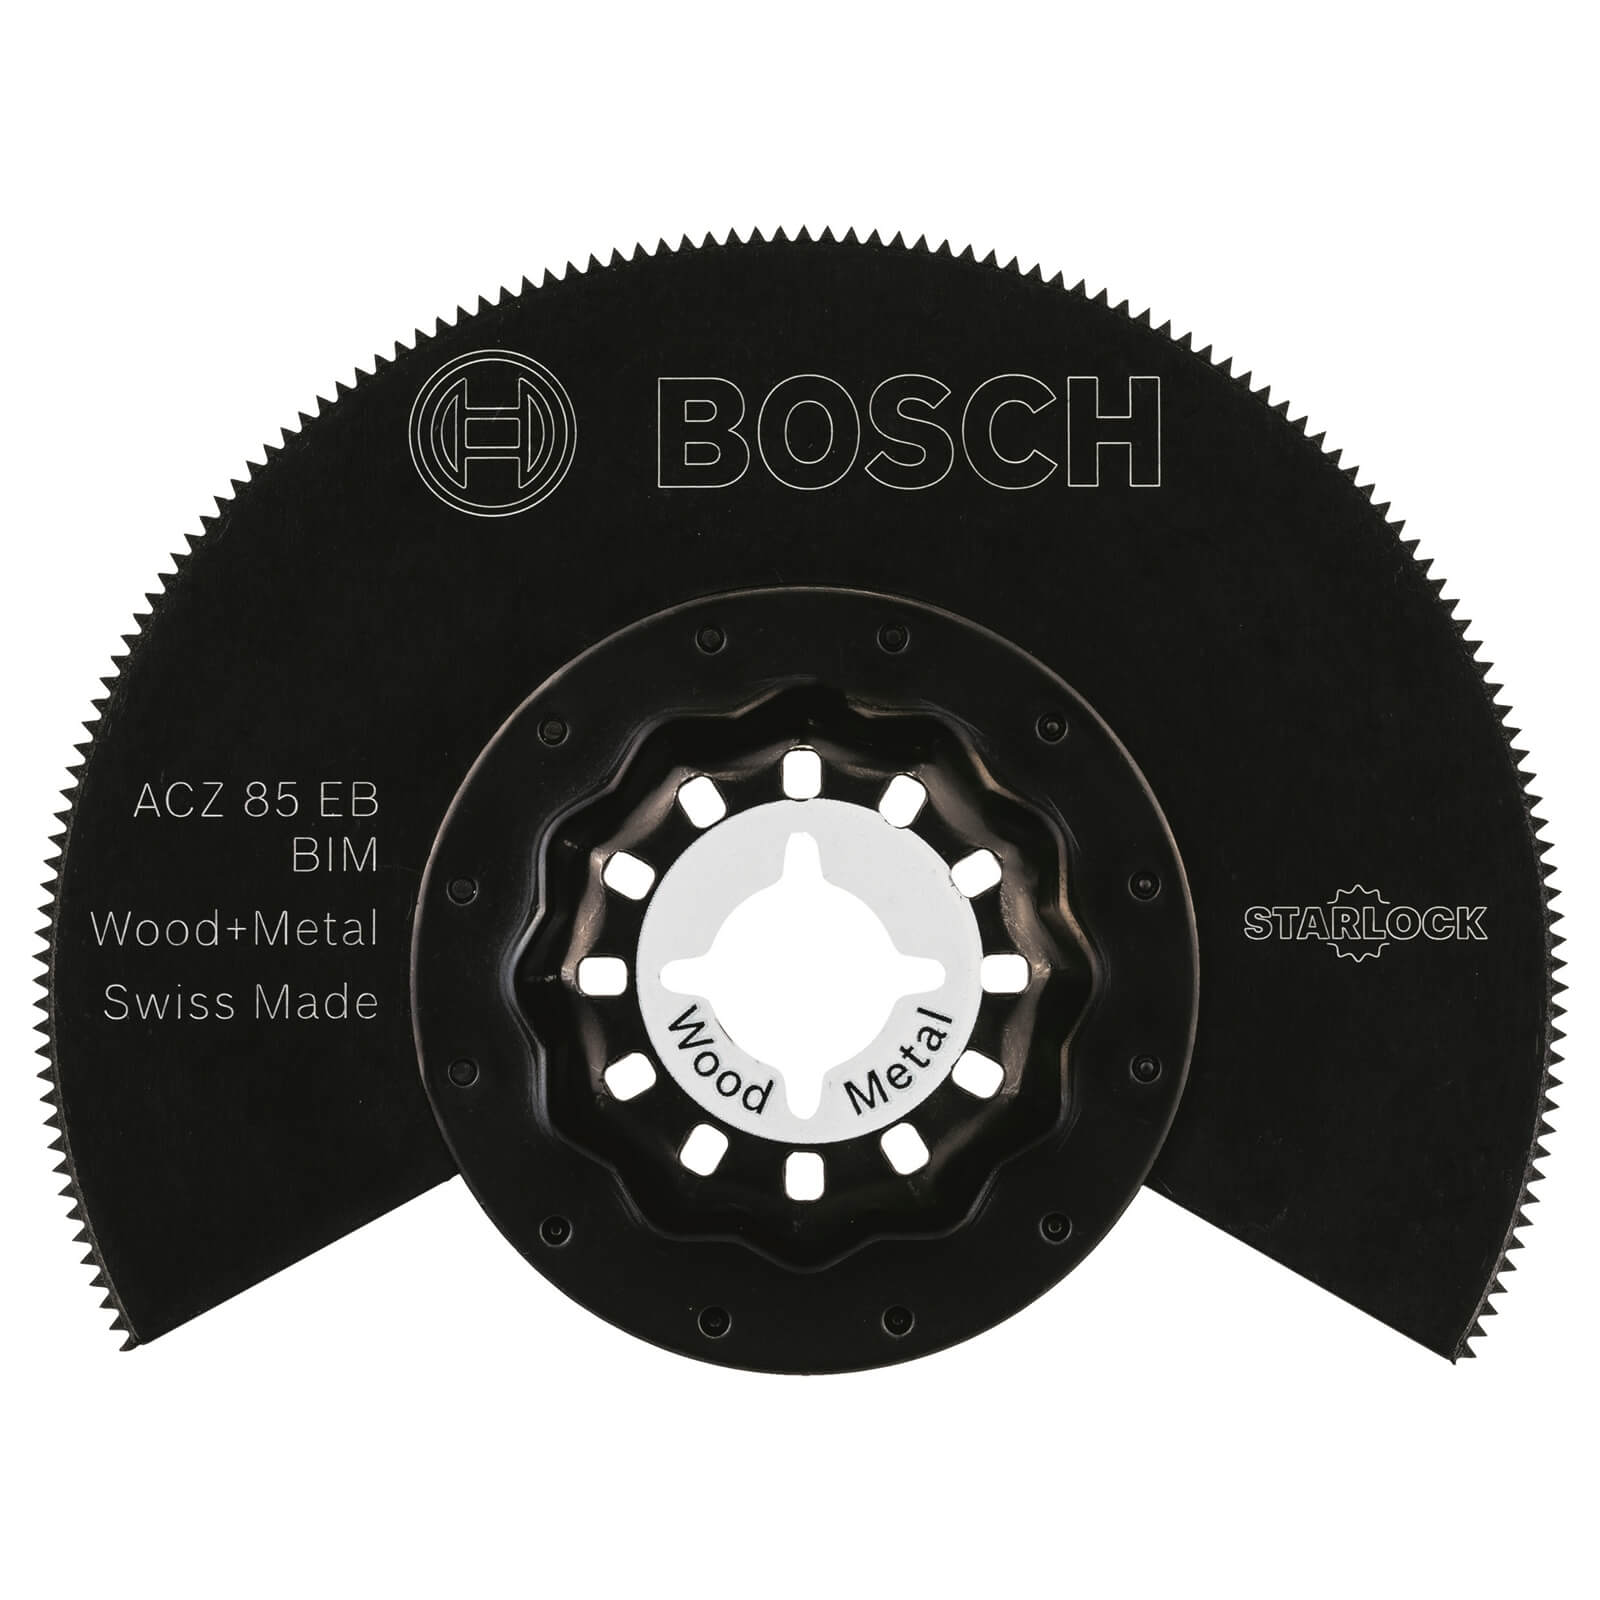 Bosch All Rounder Bi-Metal Blade